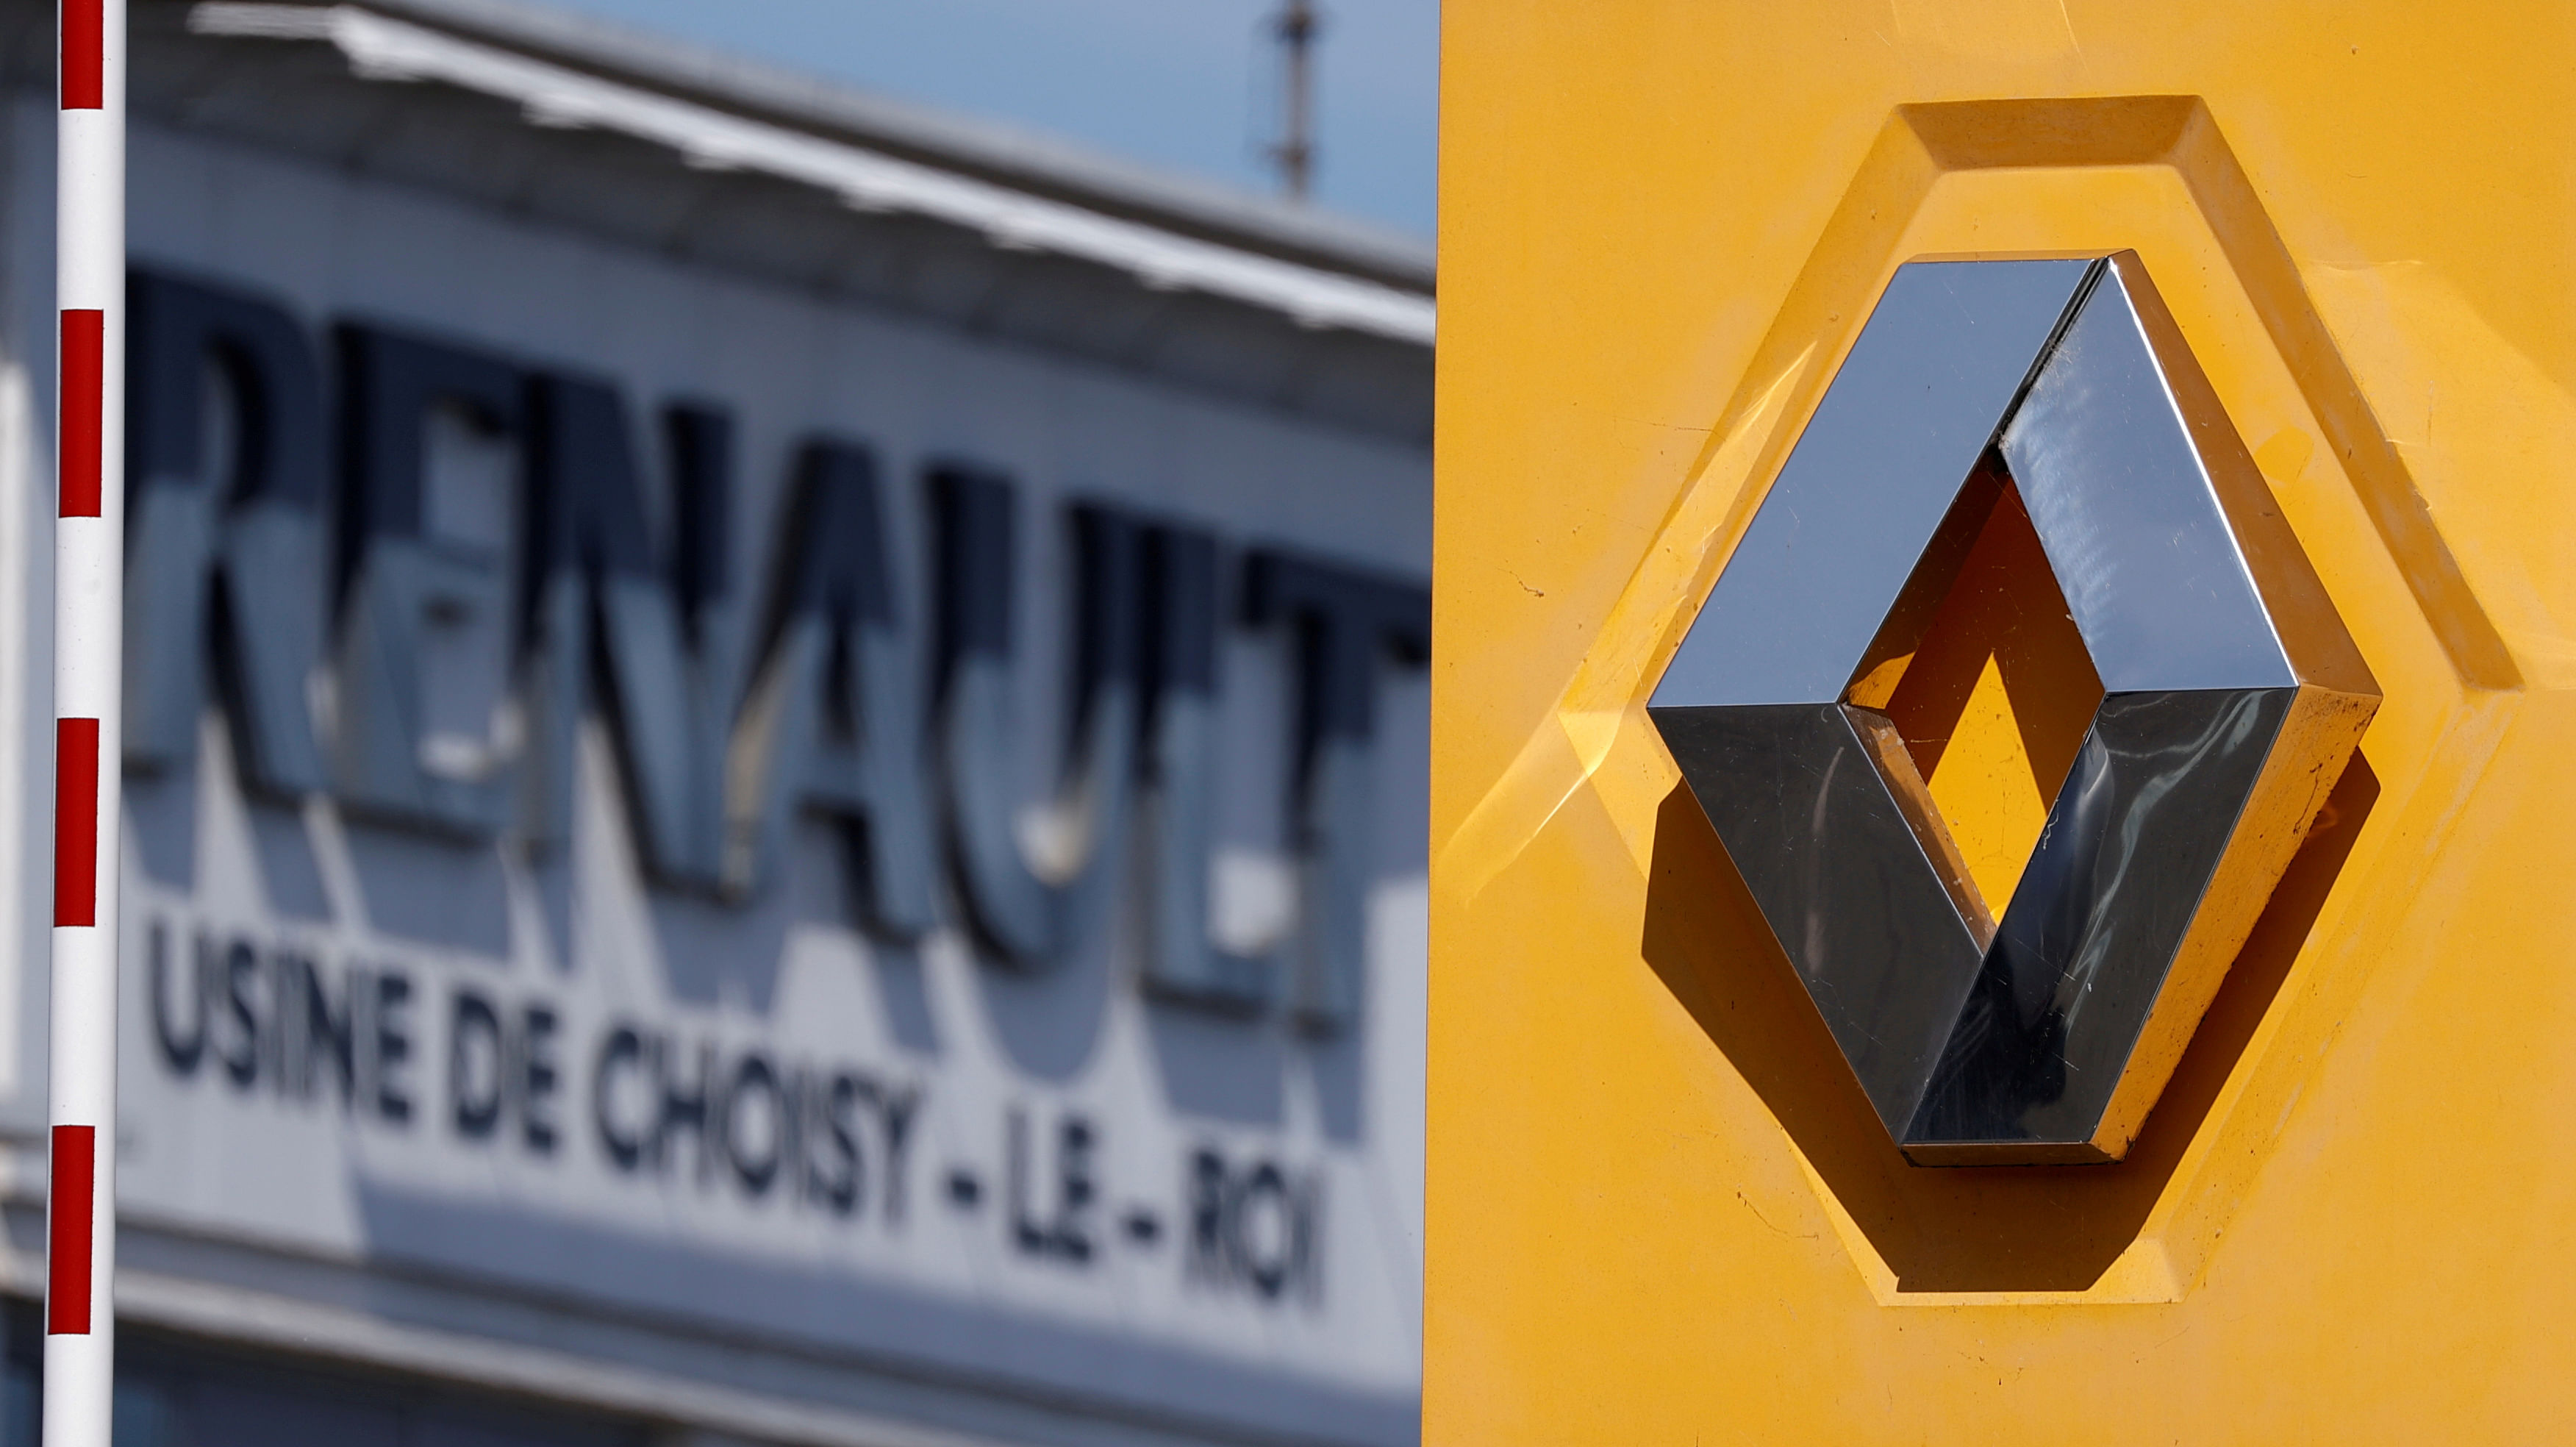 The Renault factory in Choisy-le-Roi near Paris. (Reuters Photo)